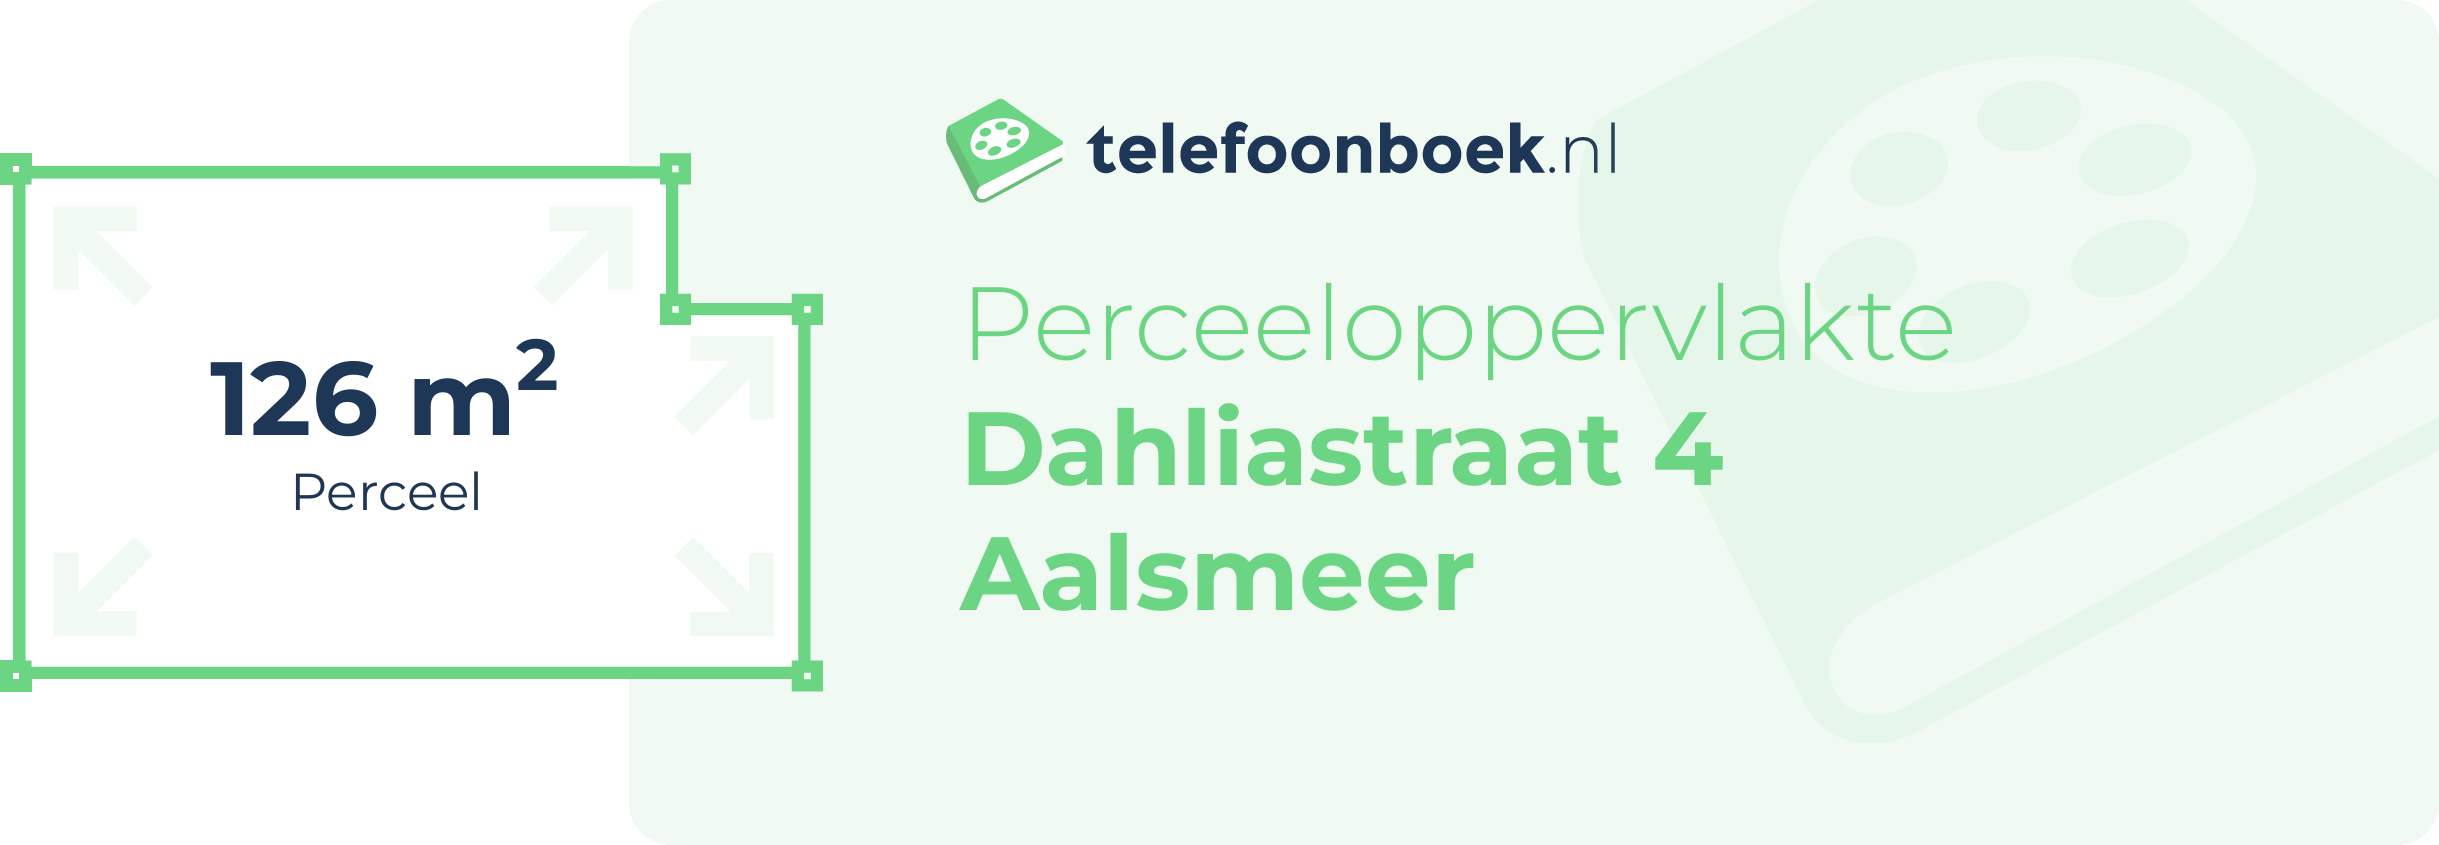 Perceeloppervlakte Dahliastraat 4 Aalsmeer